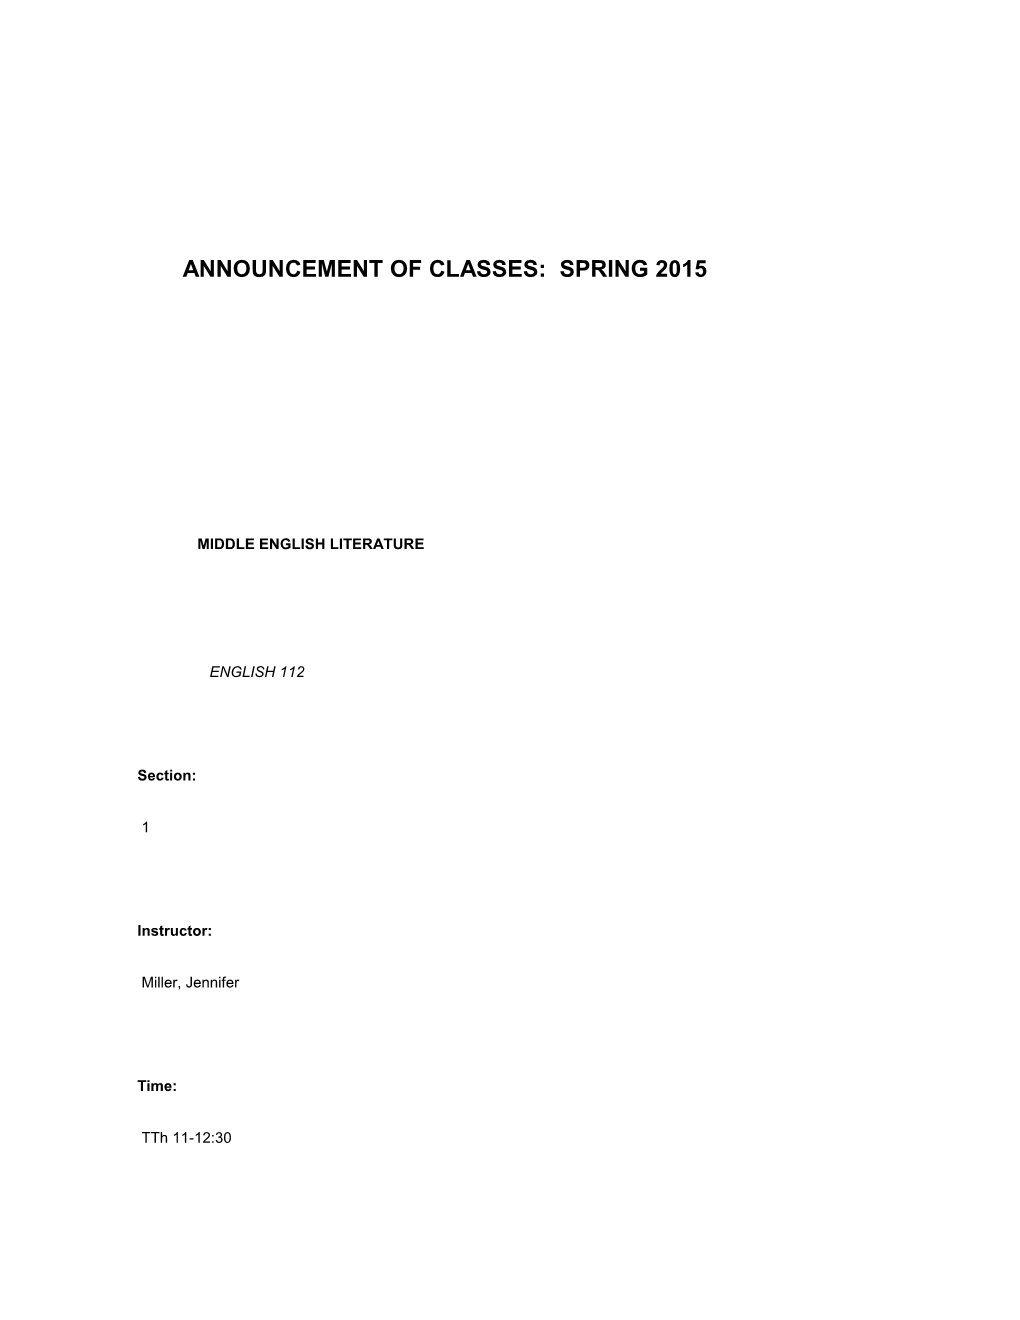 Announcement of Classes: Spring 2015